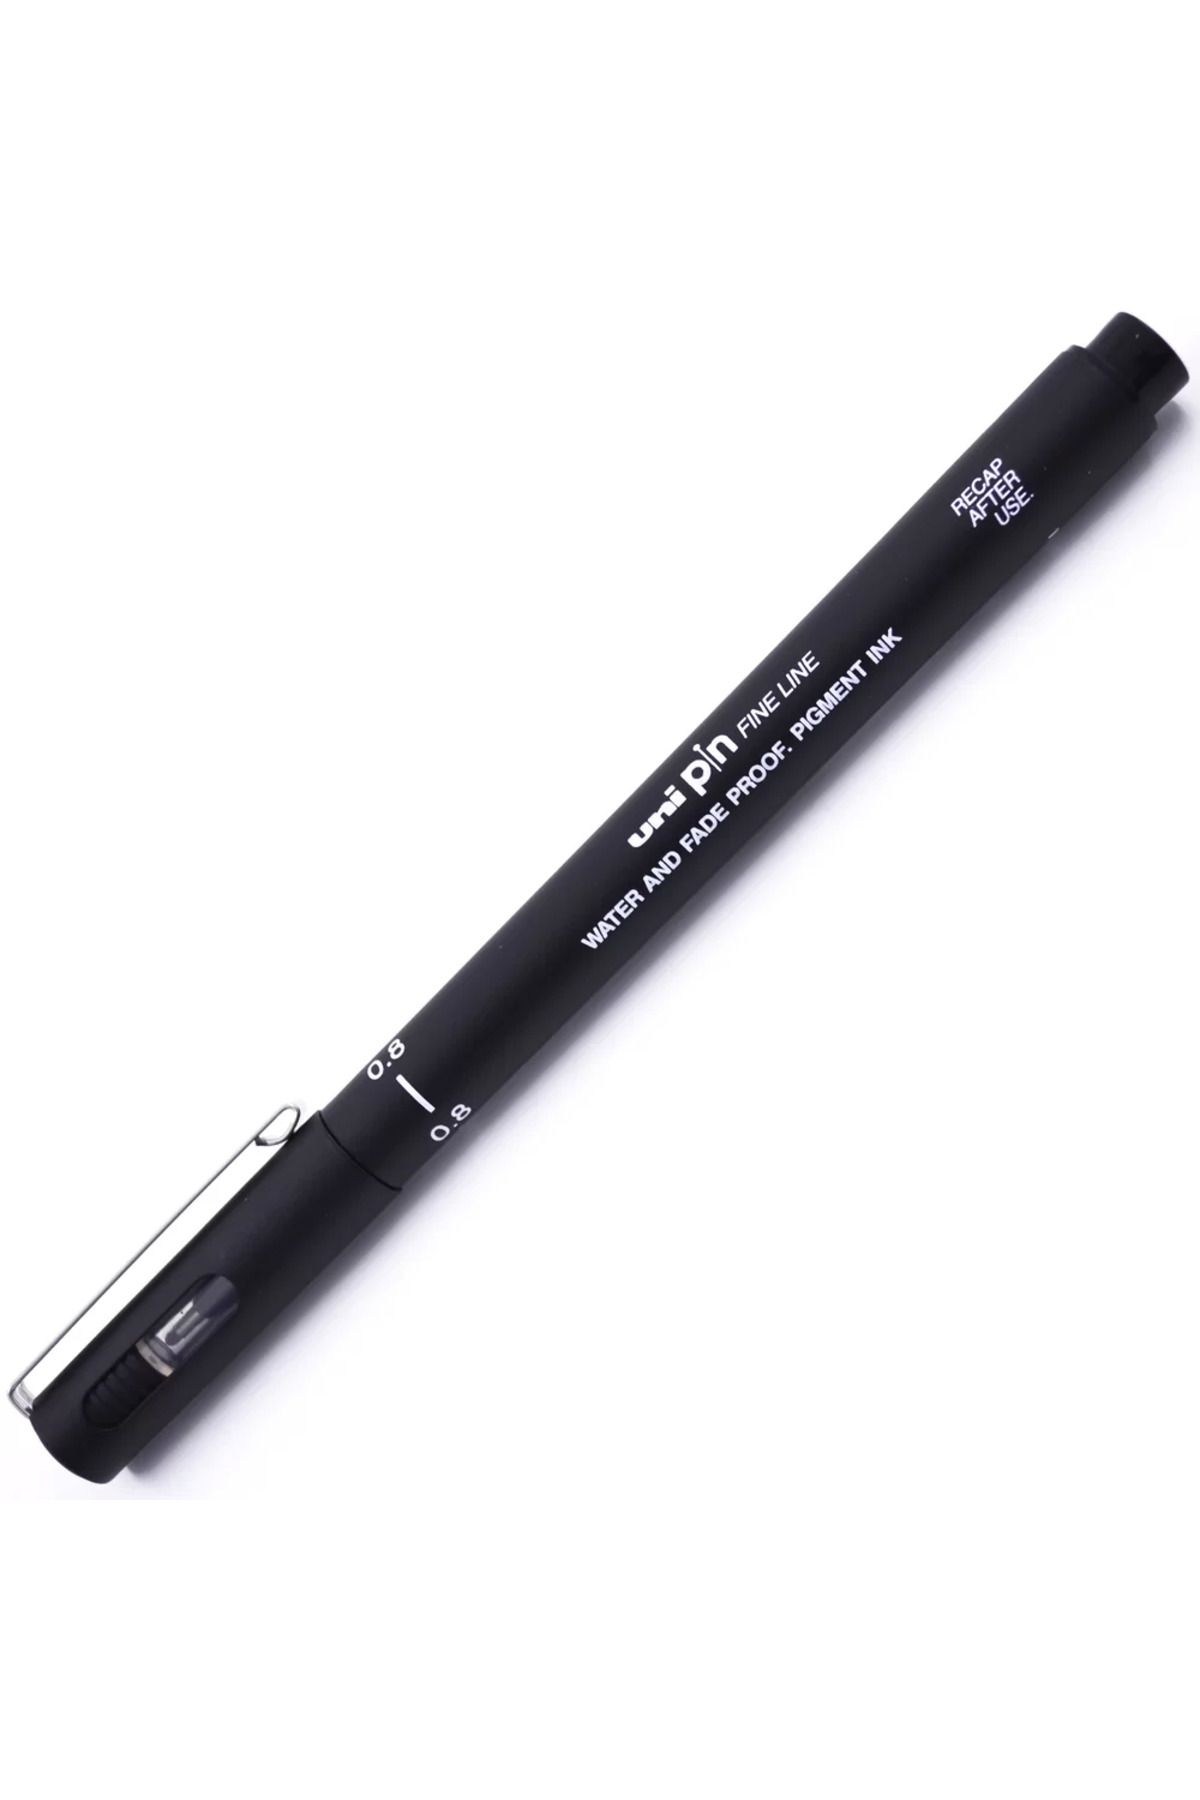 Uni -ball Pin Fine Line Teknik Çizim Kalemi 0.8 Mm Siyah